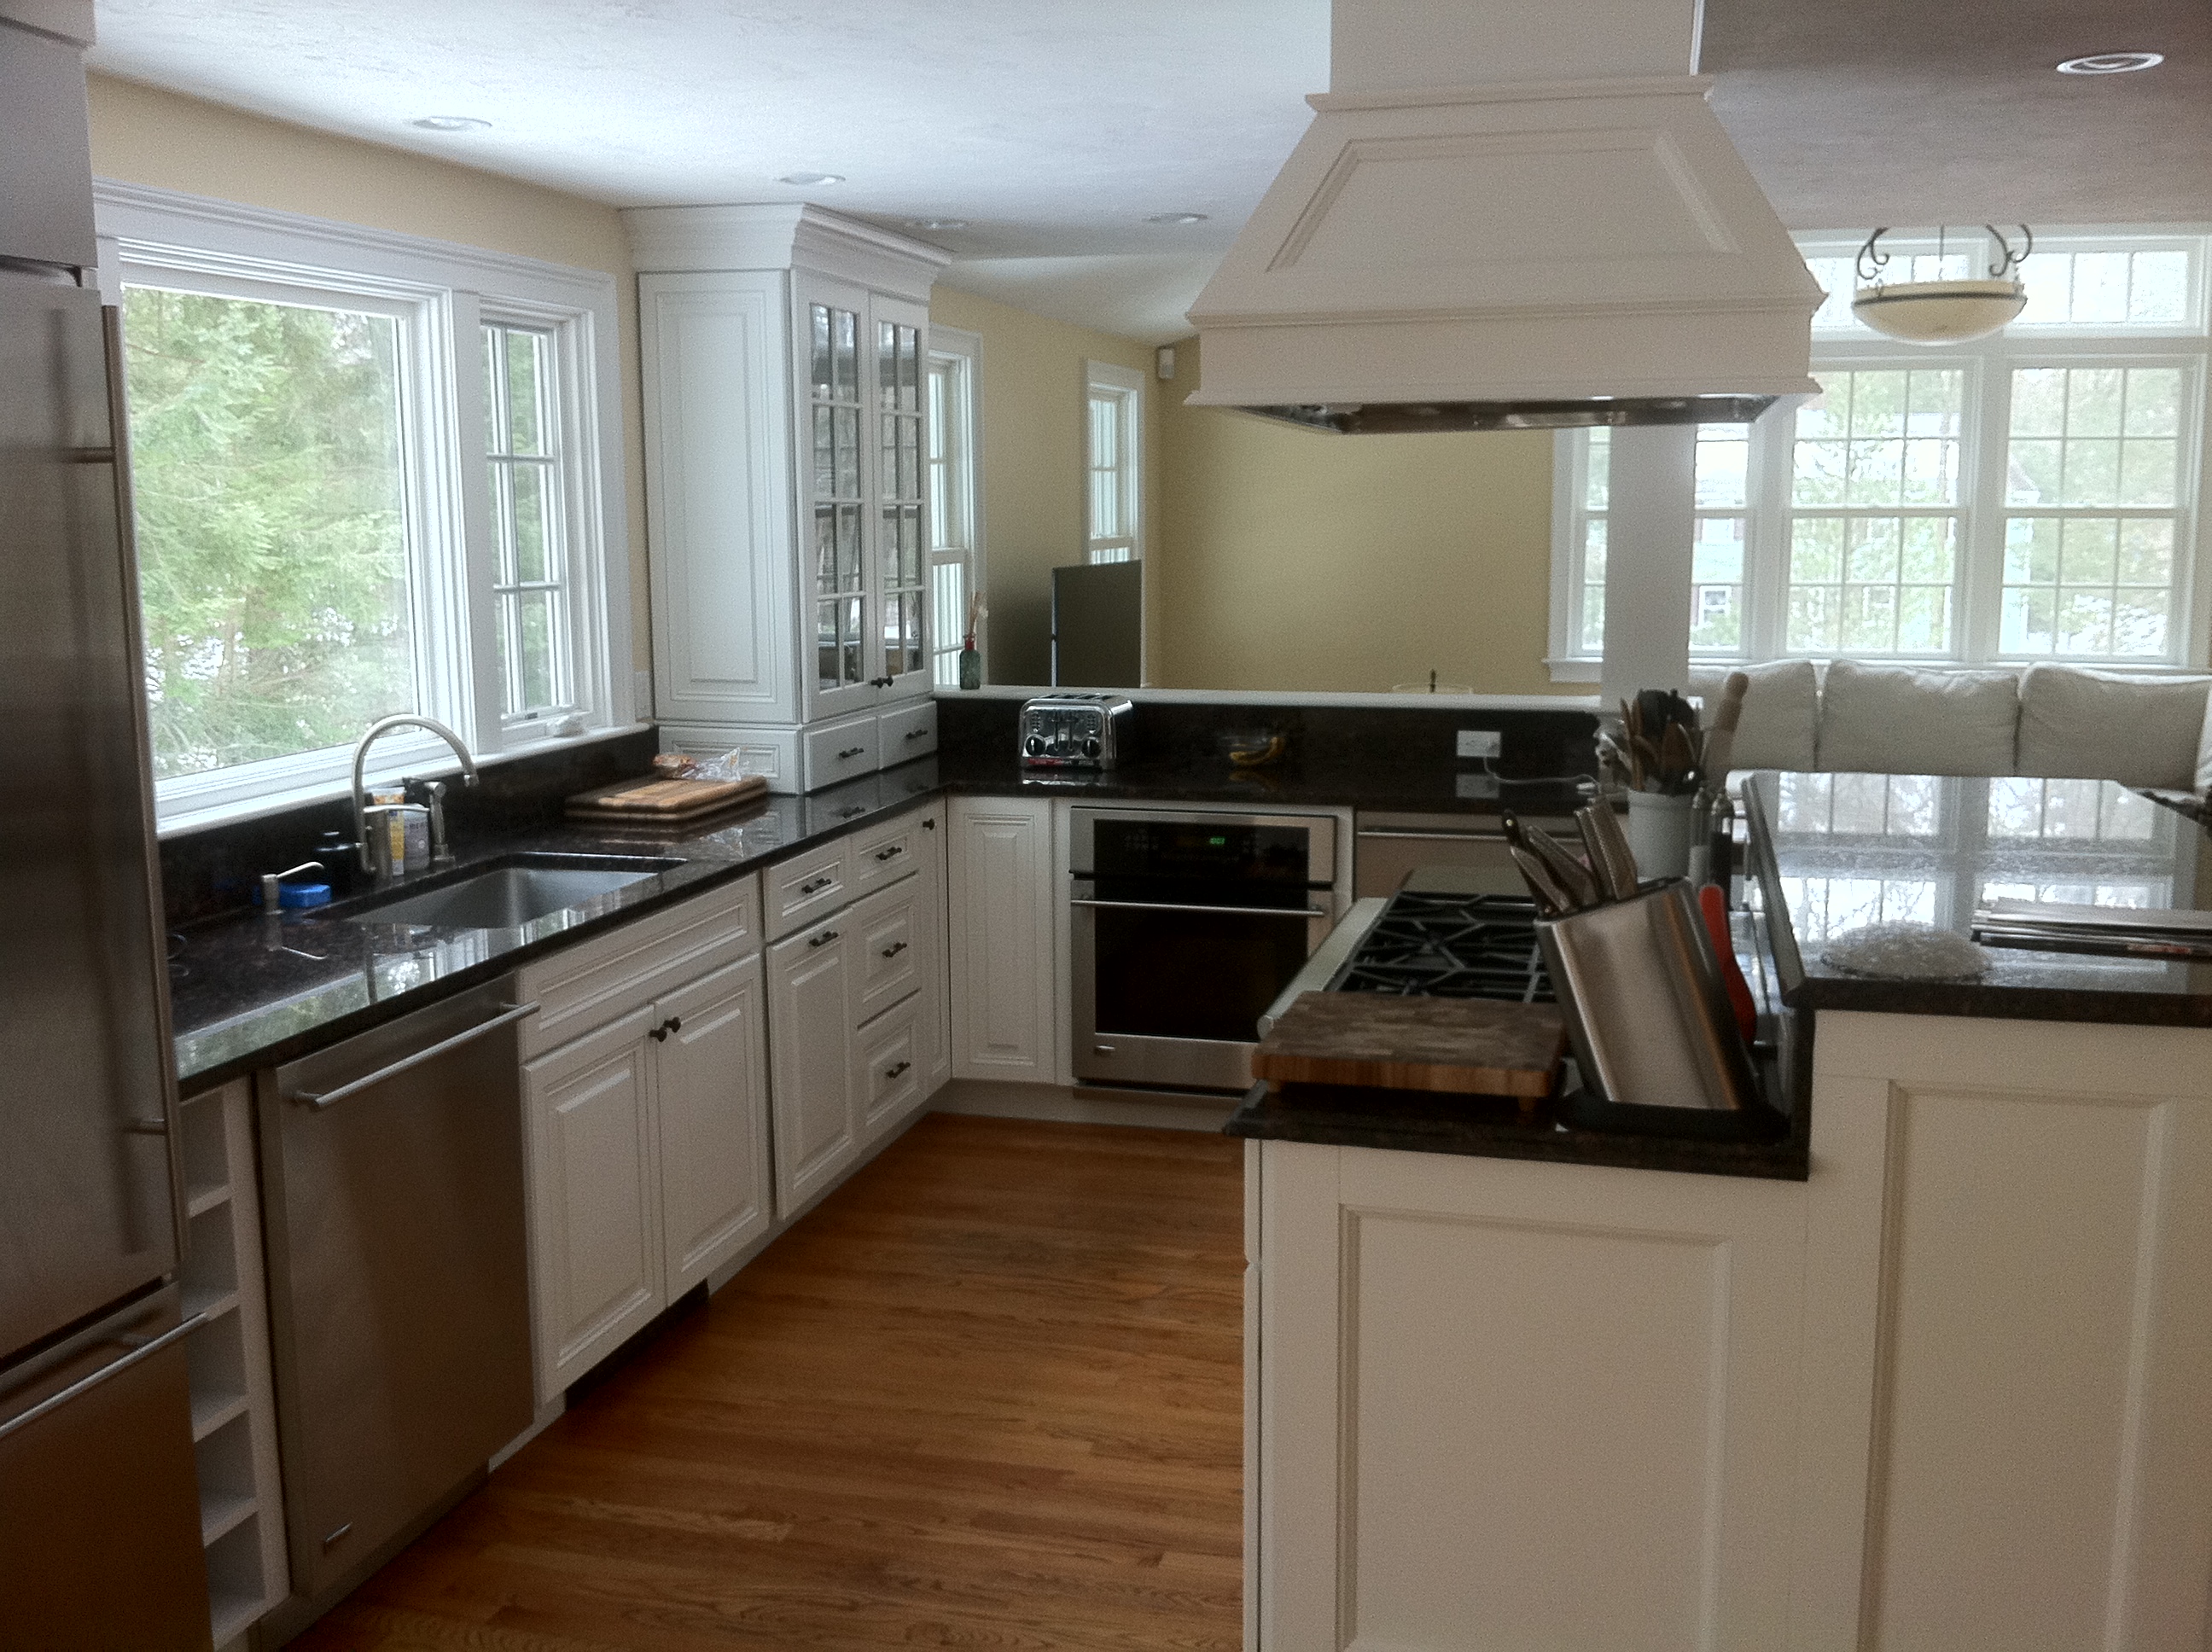  Cabinet Refinishing Kitchen Remodeling In Rhode Island 